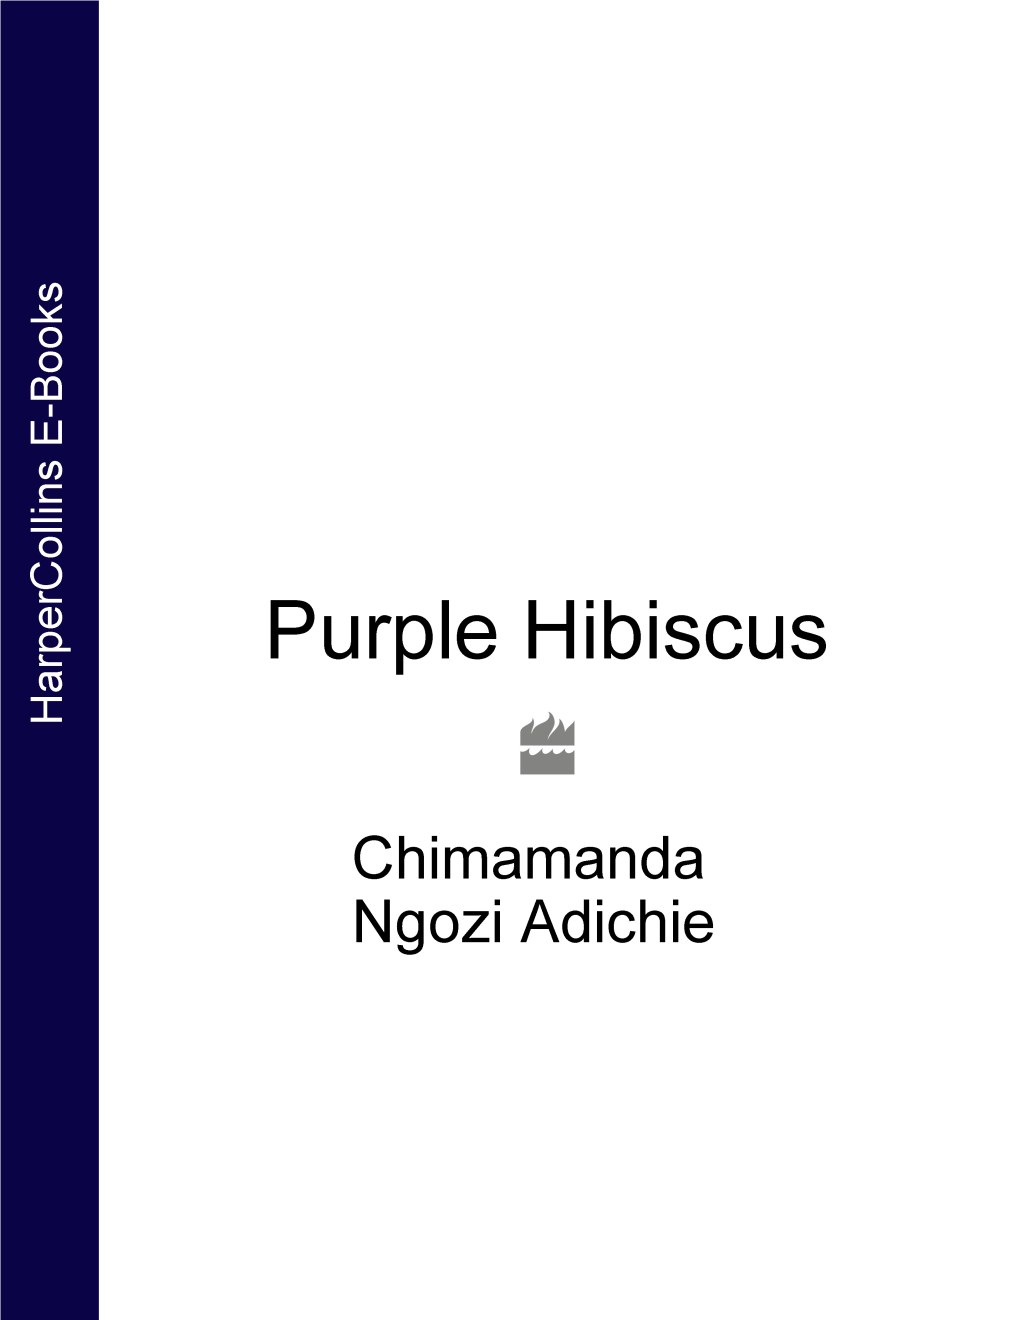 Purple Hibiscus Novel